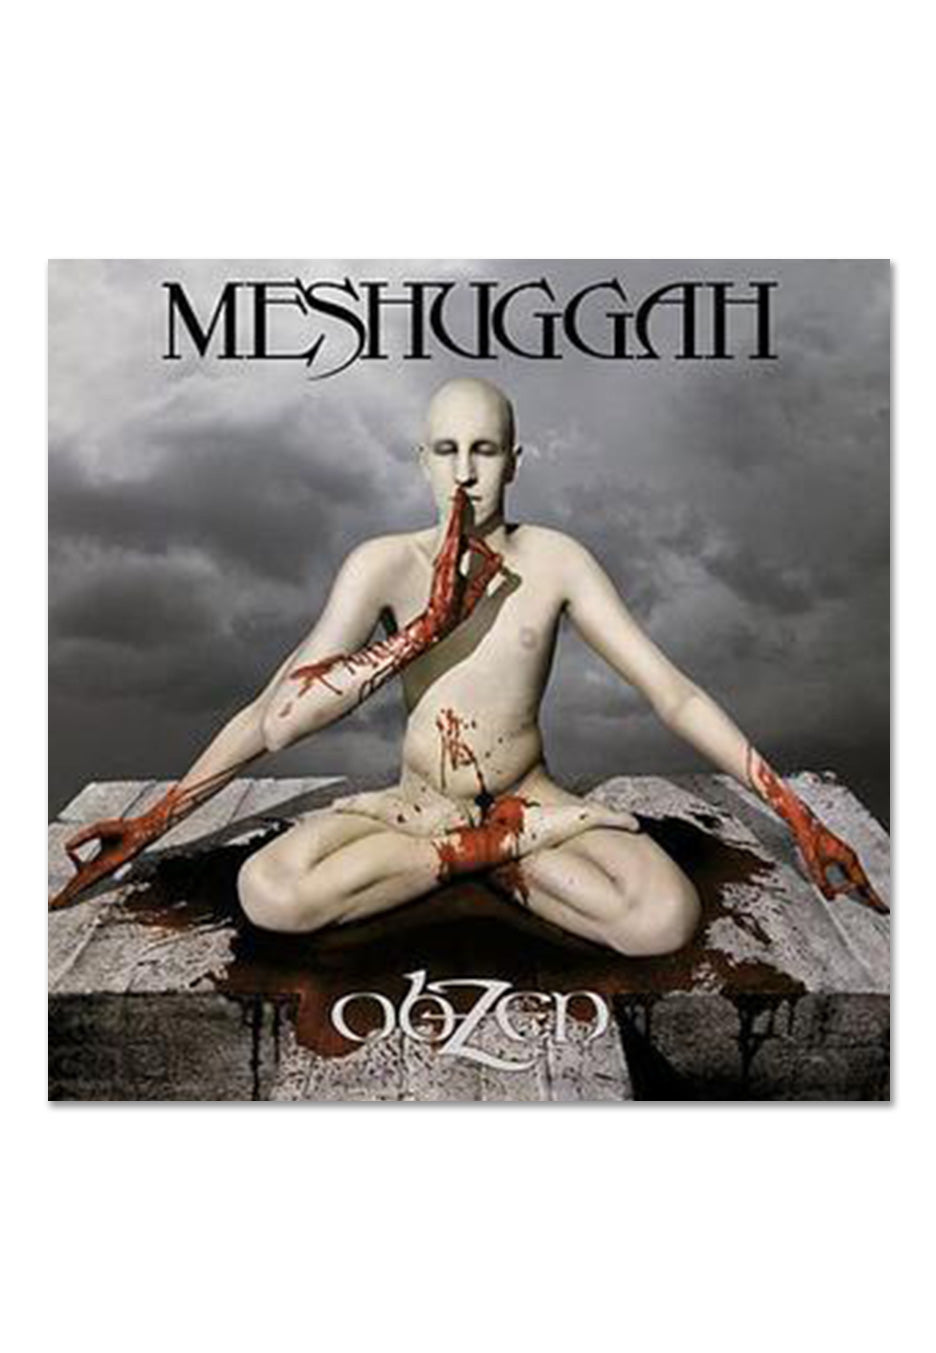 Meshuggah - ObZen (15th Anniversary Edition) Ltd. Red/Black Circle - Colored 2 Vinyl